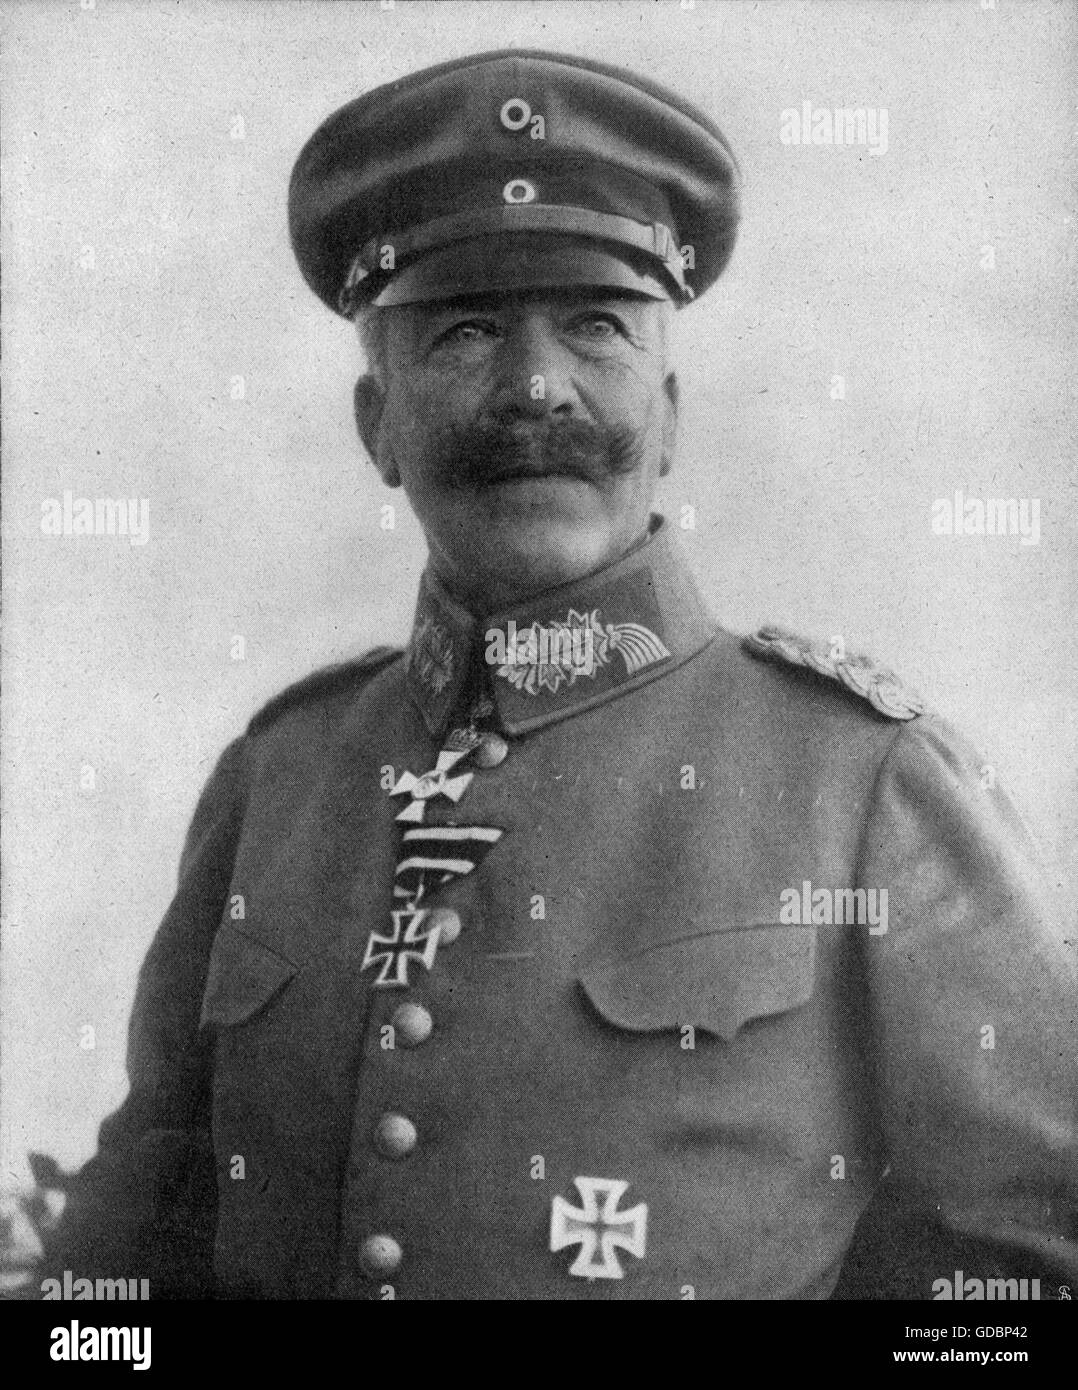 Francois, Hermann von, 31.1.1856 - 15.5.1933, German general, half length, from: 'Die Woche', issue 43, 1914, Stock Photo